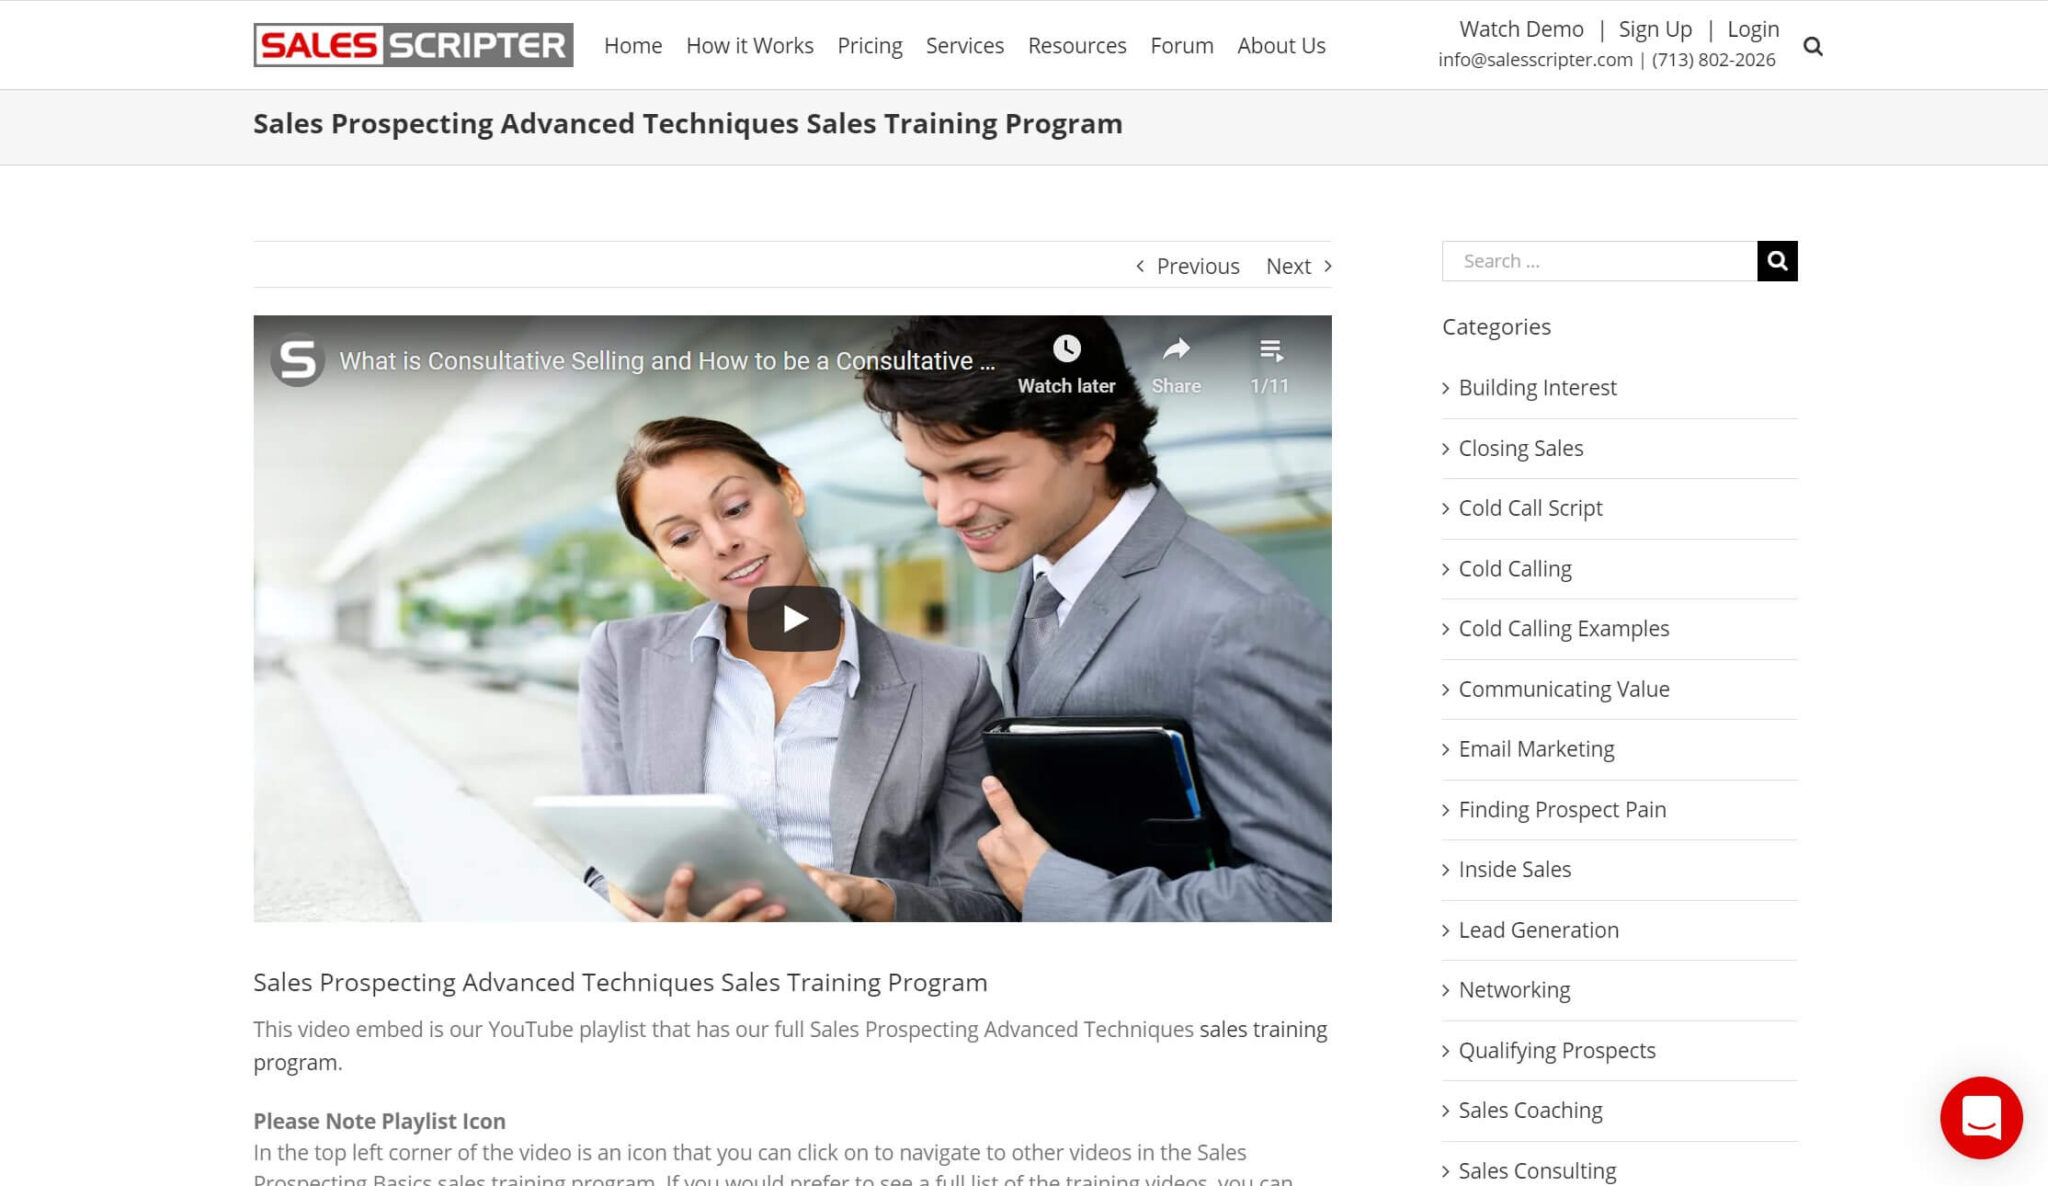 The Sales Prospecting Advanced Techniques online sales training course.